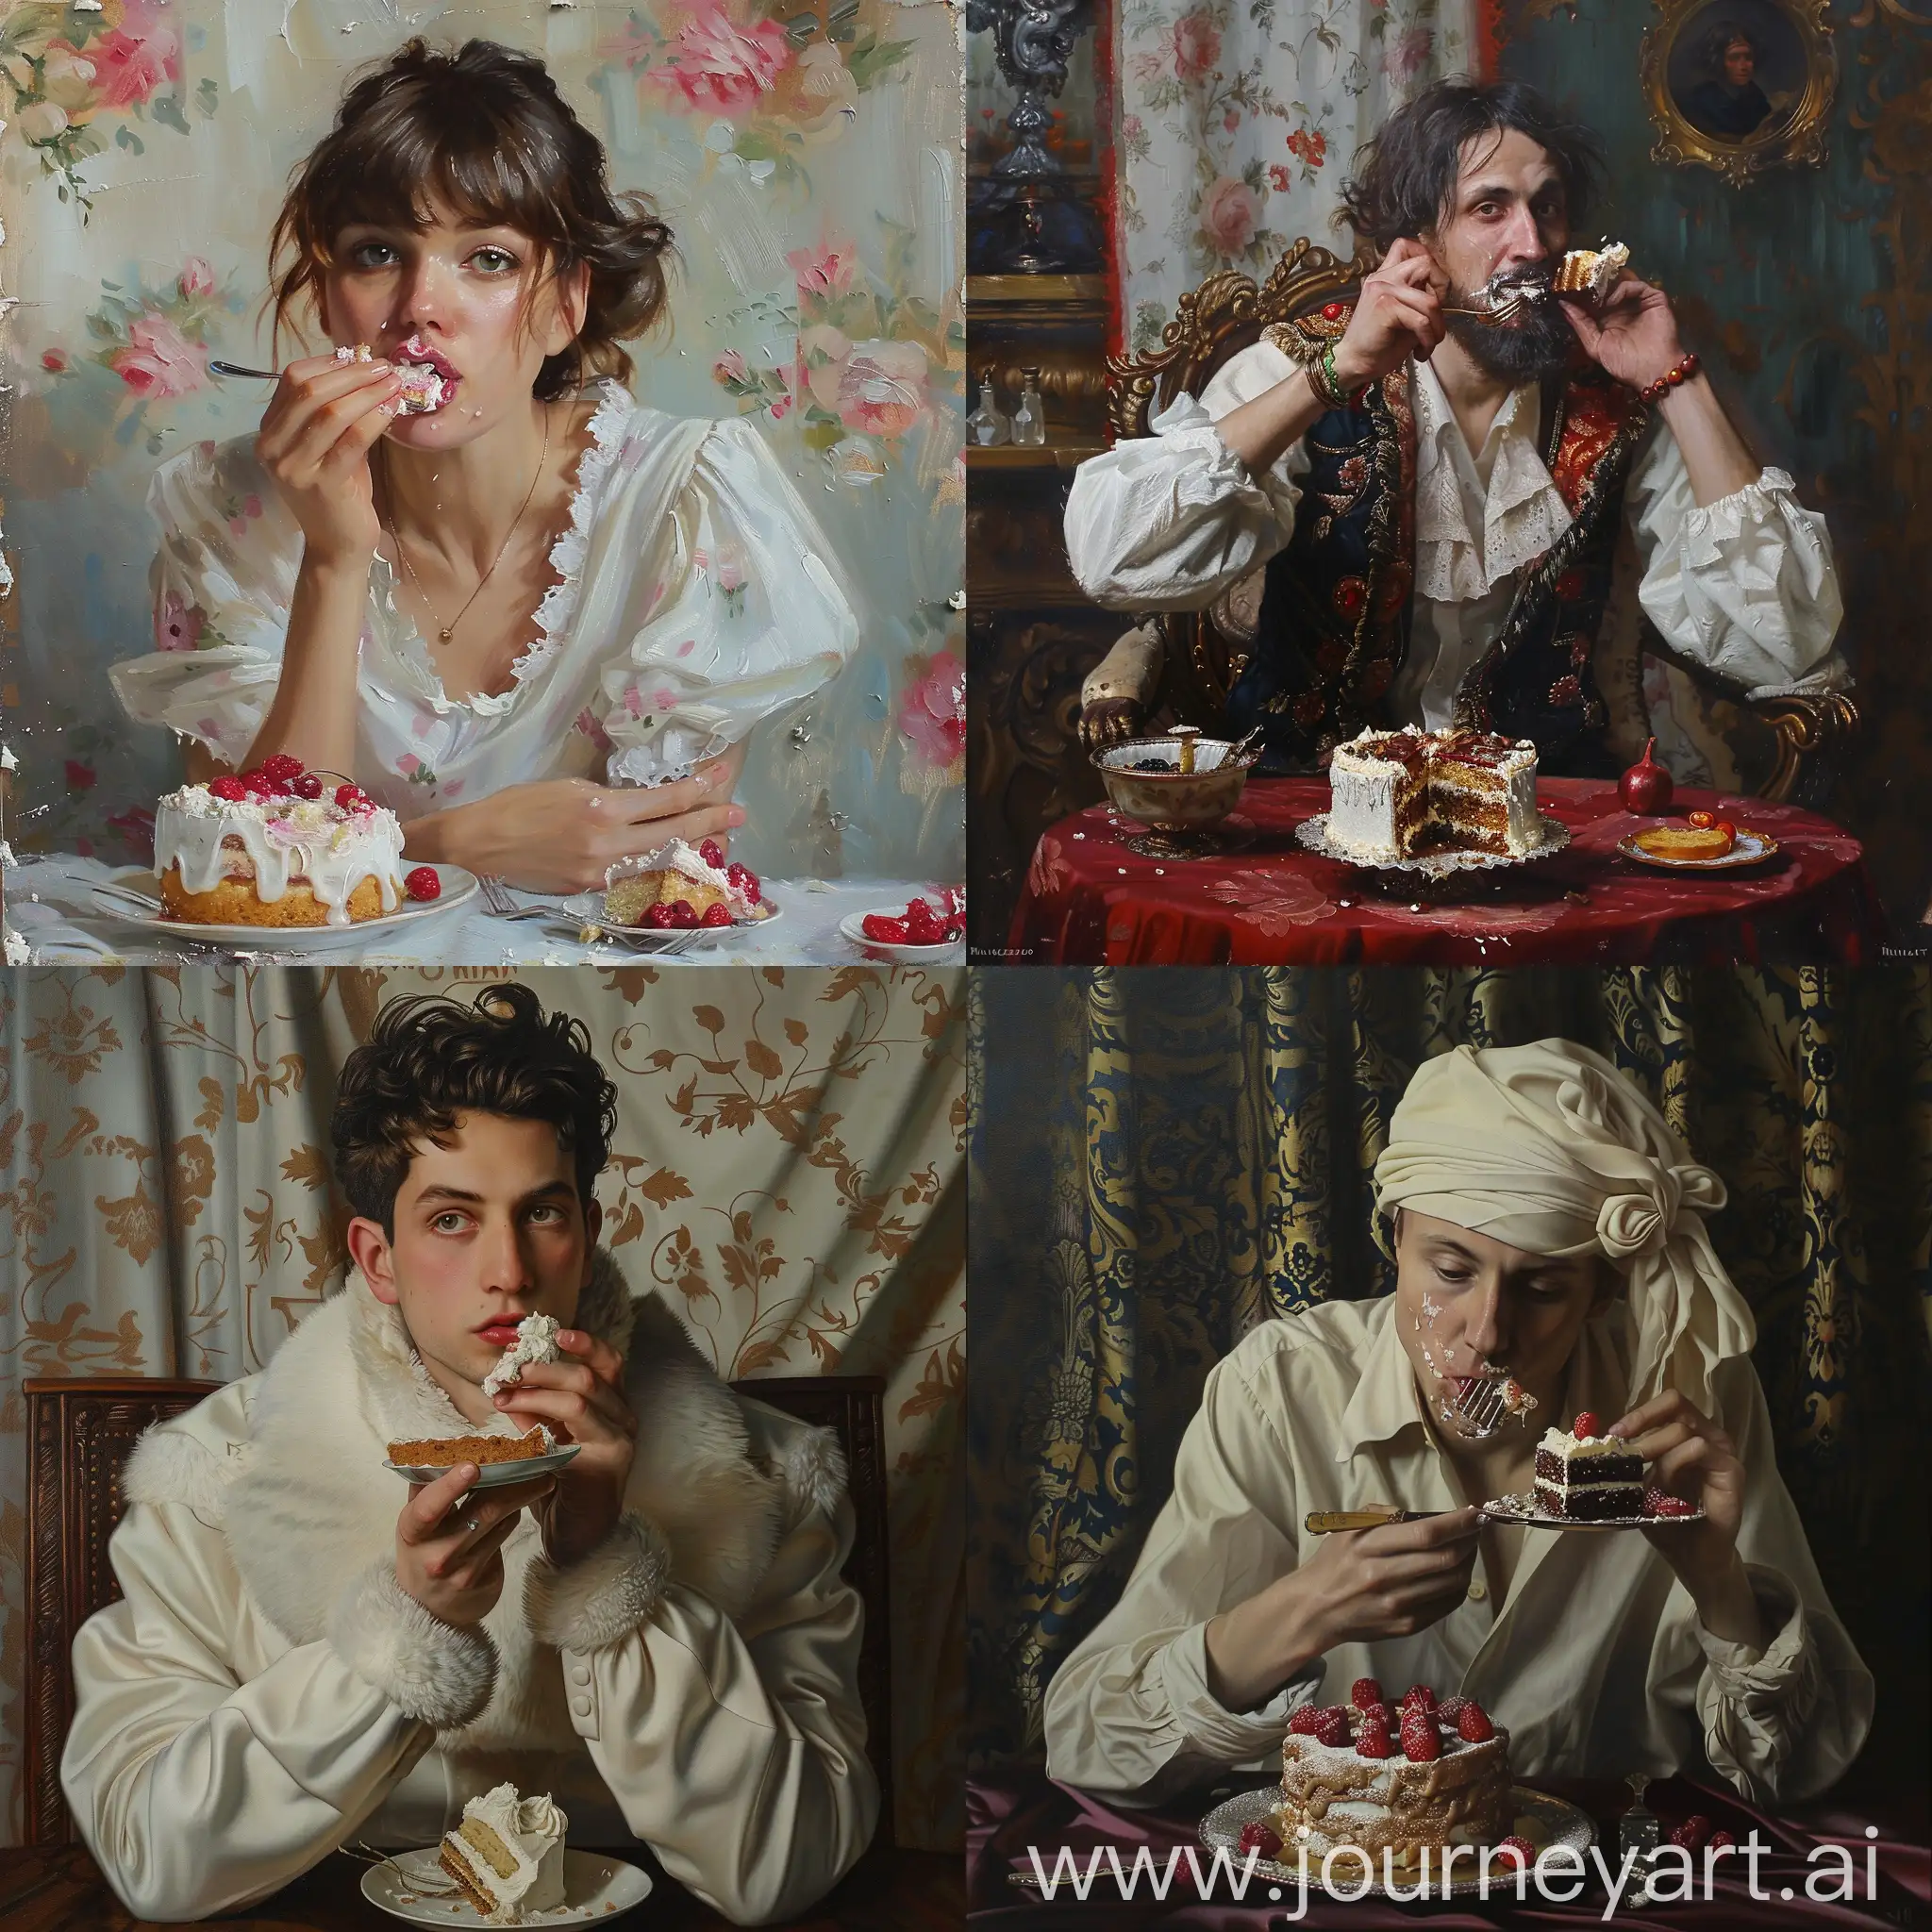 Rinat-Agzamov-Enjoying-Cake-Portrait-of-a-Gastronomic-Delight